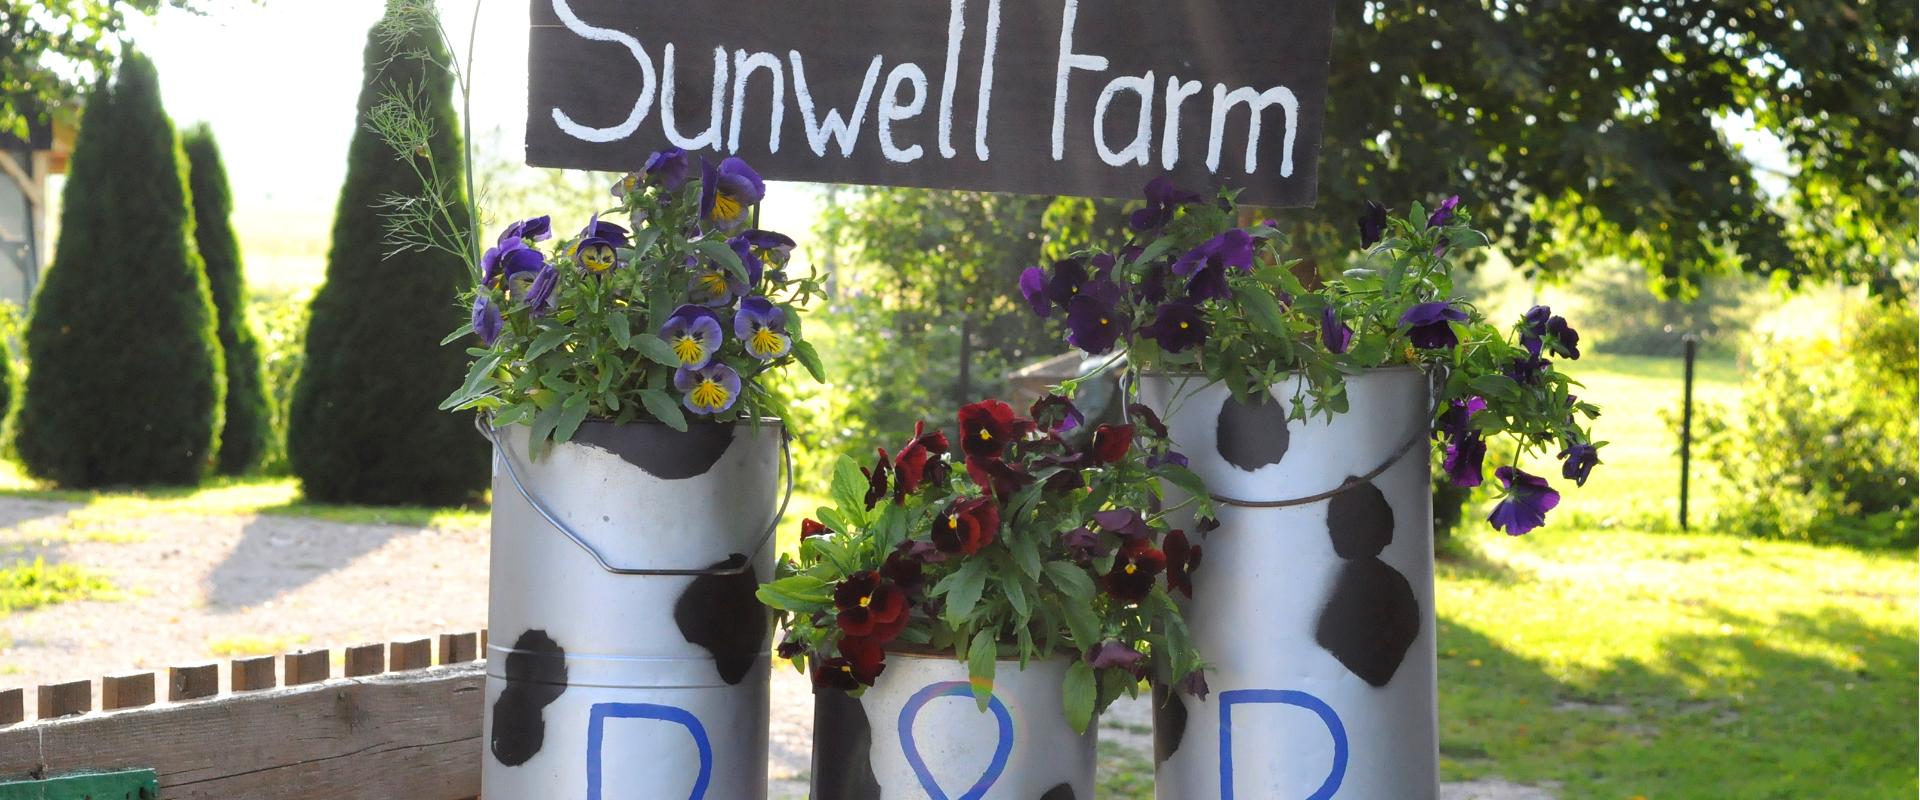 Sunwell Farm